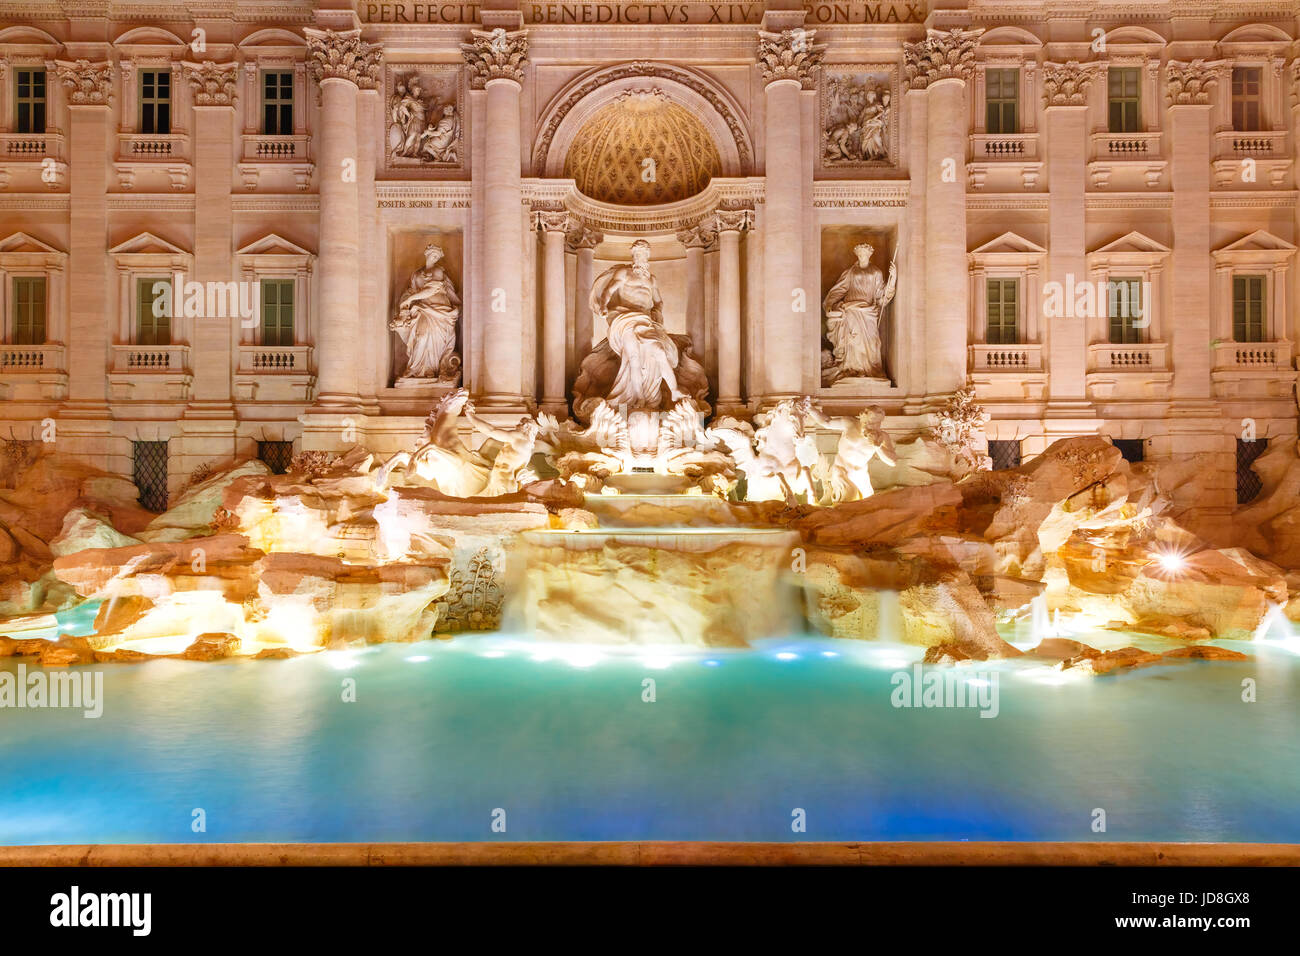 La fontana de Trevi o la Fontana di Trevi, en Roma, Italia Foto de stock